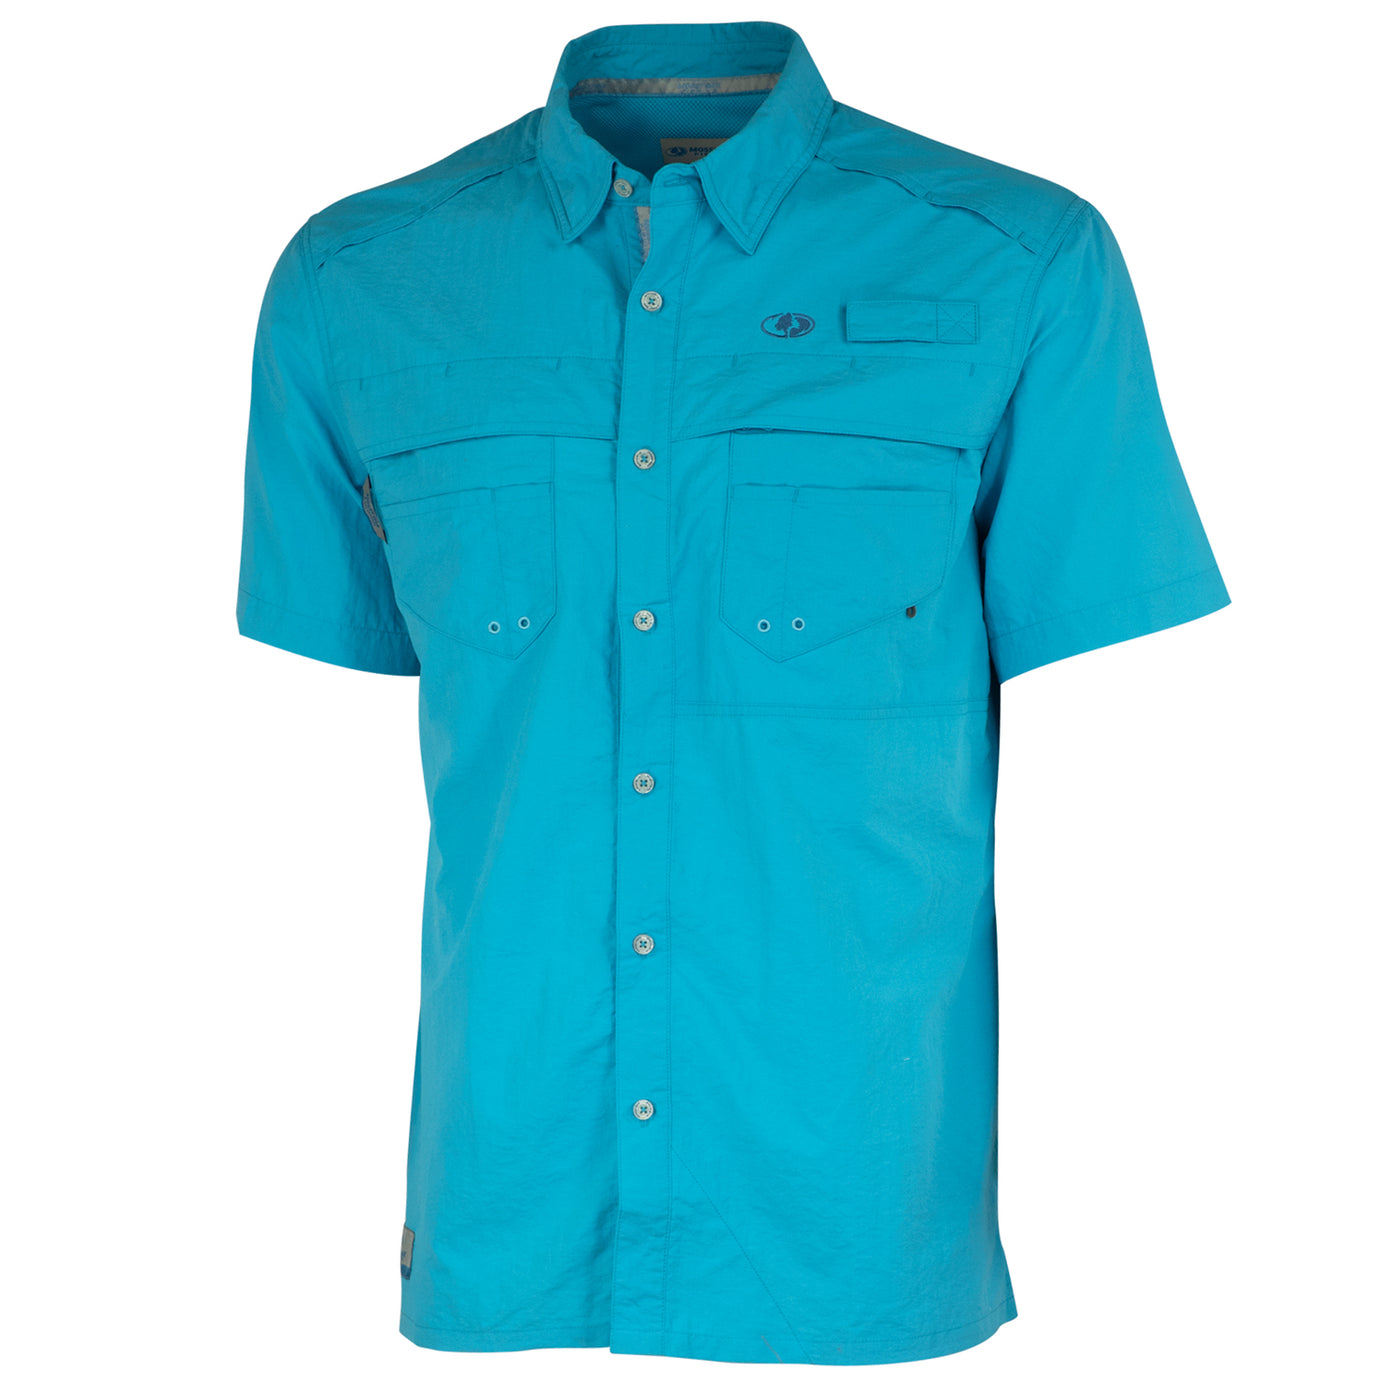 Marino Bay Green Fishing Shirt Button Up Short Sleeve Collared Adult Men's  XL 